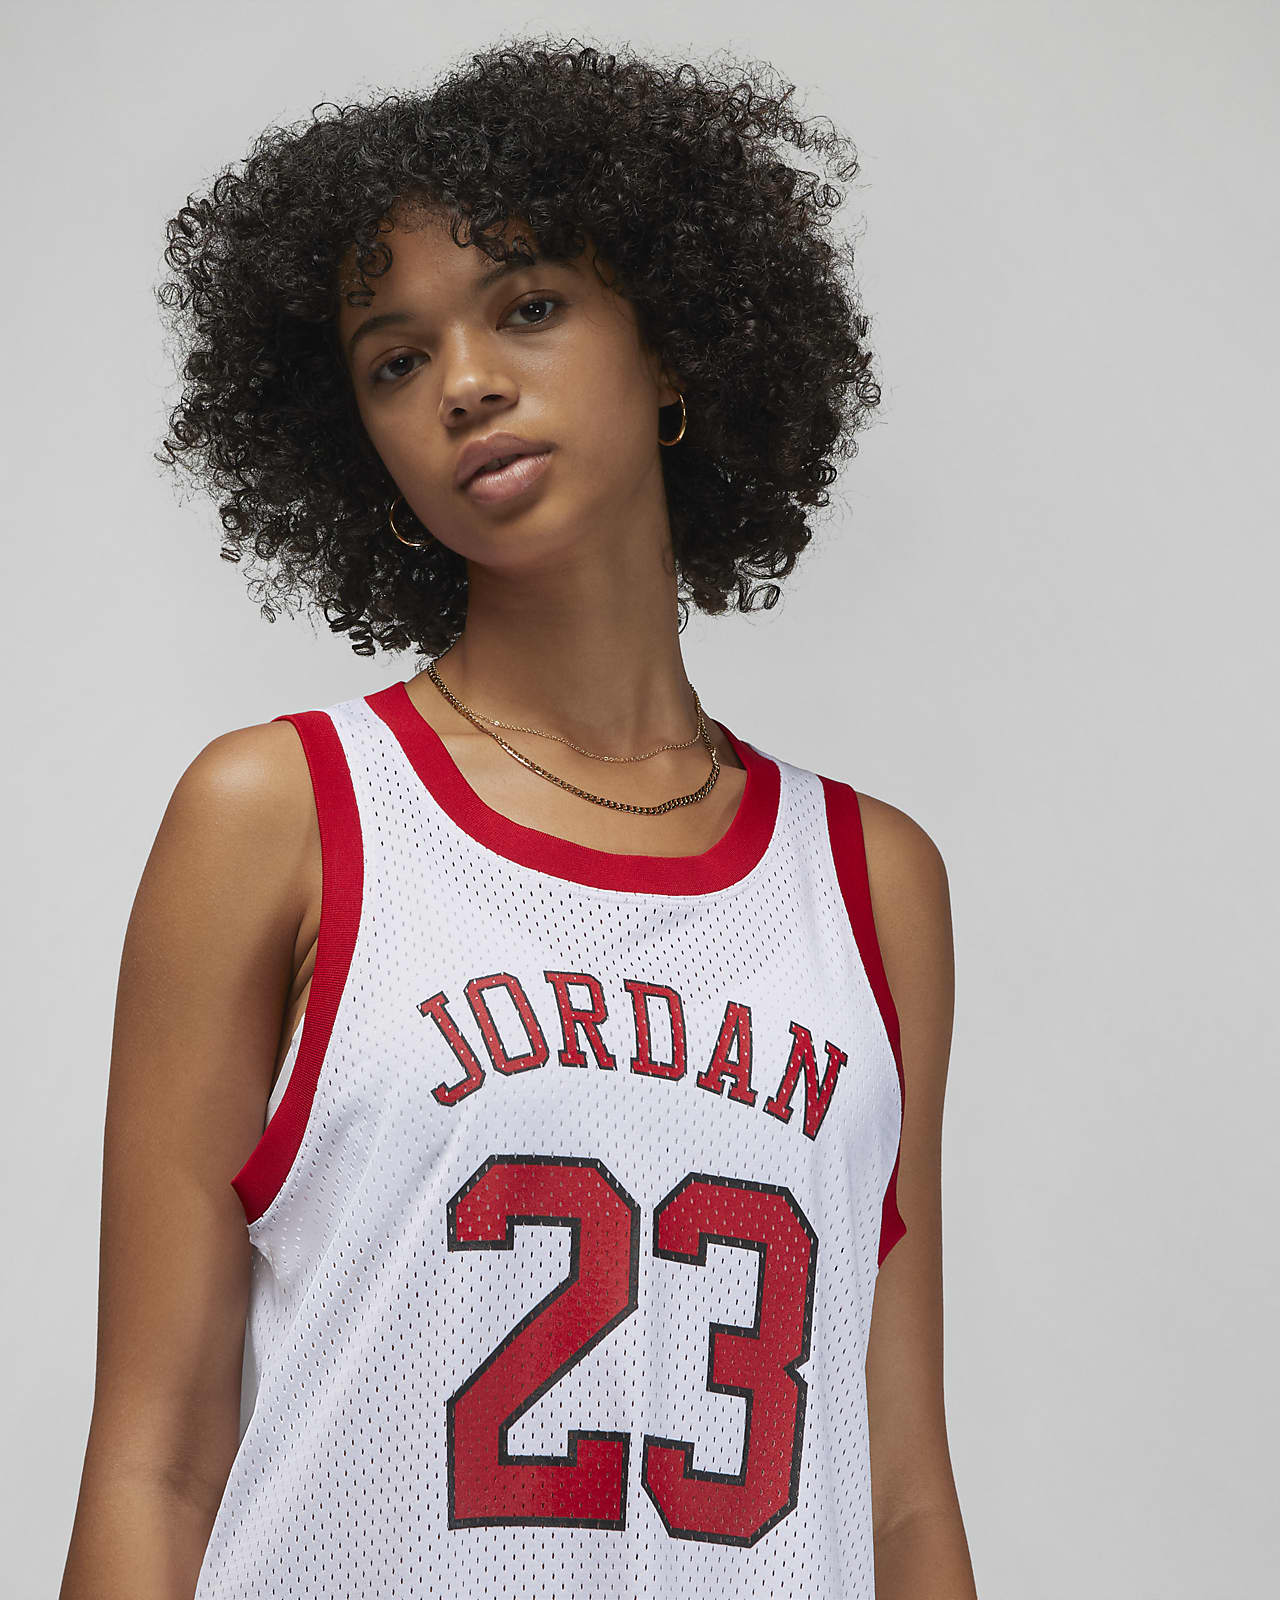 Jordan (Her)itage Women's Dress. Nike SA